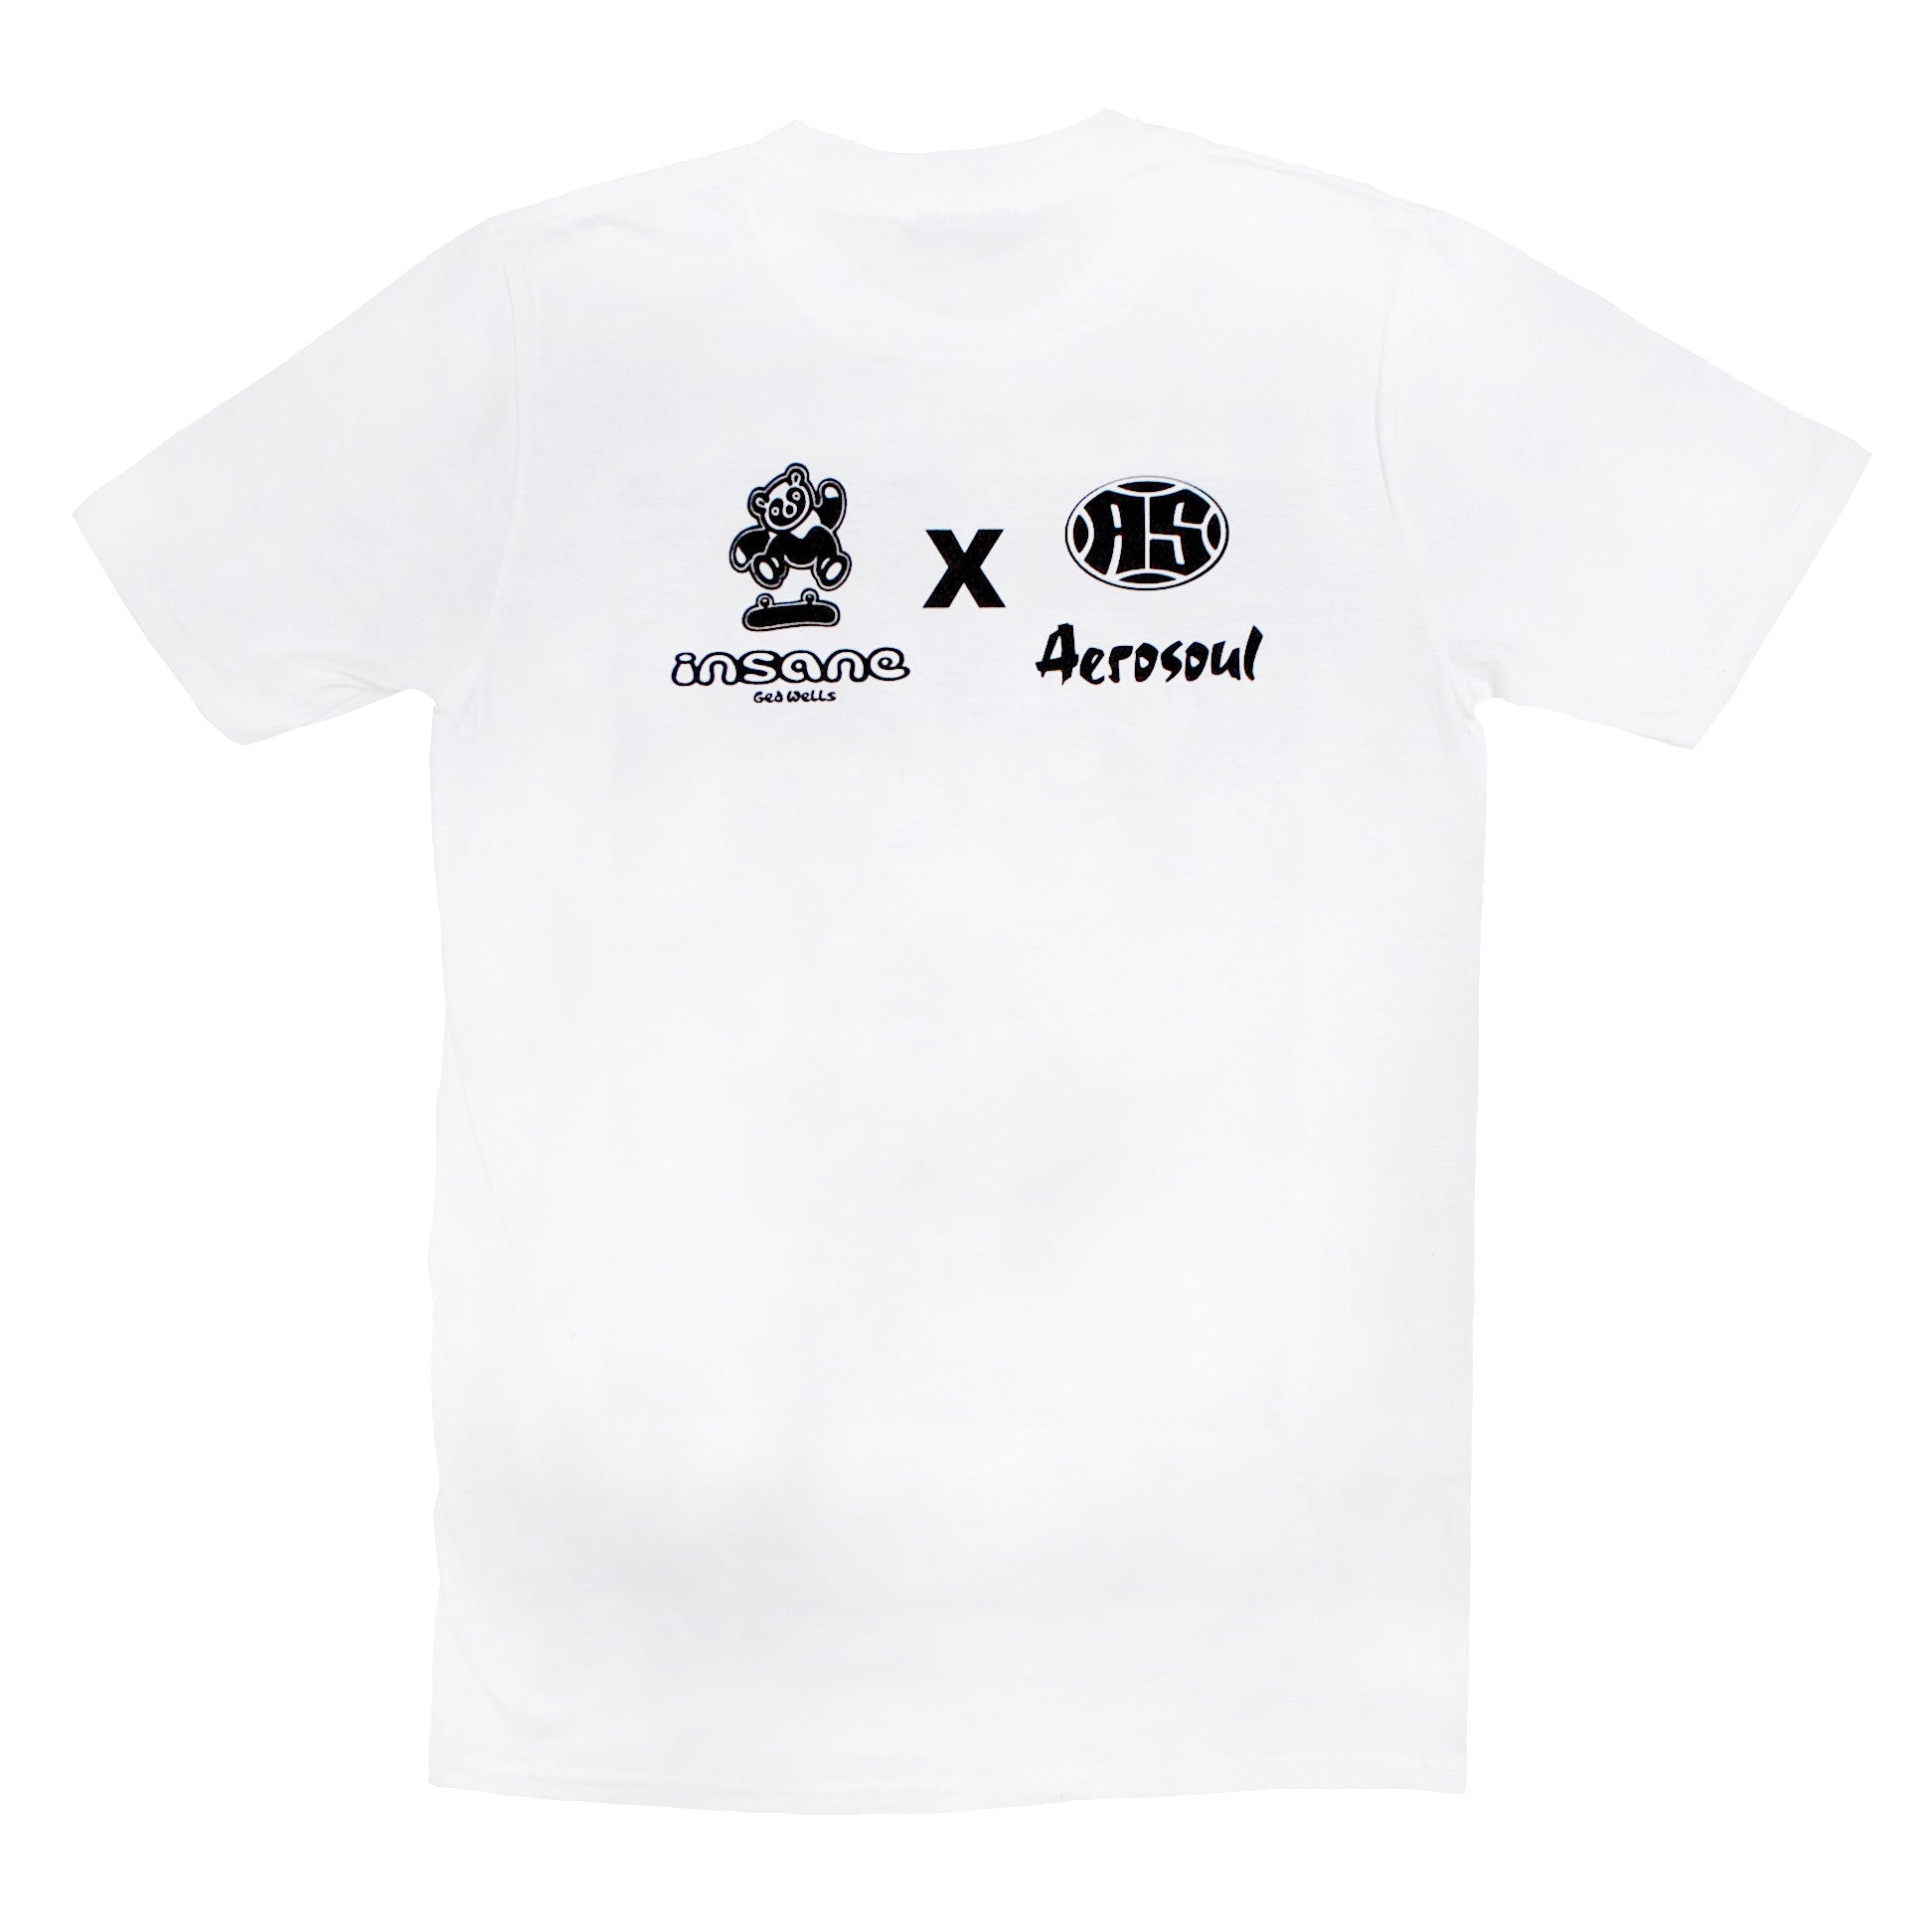 Insane X Aerosoul "Peaceful Lion" Limited Edition Collab (White)